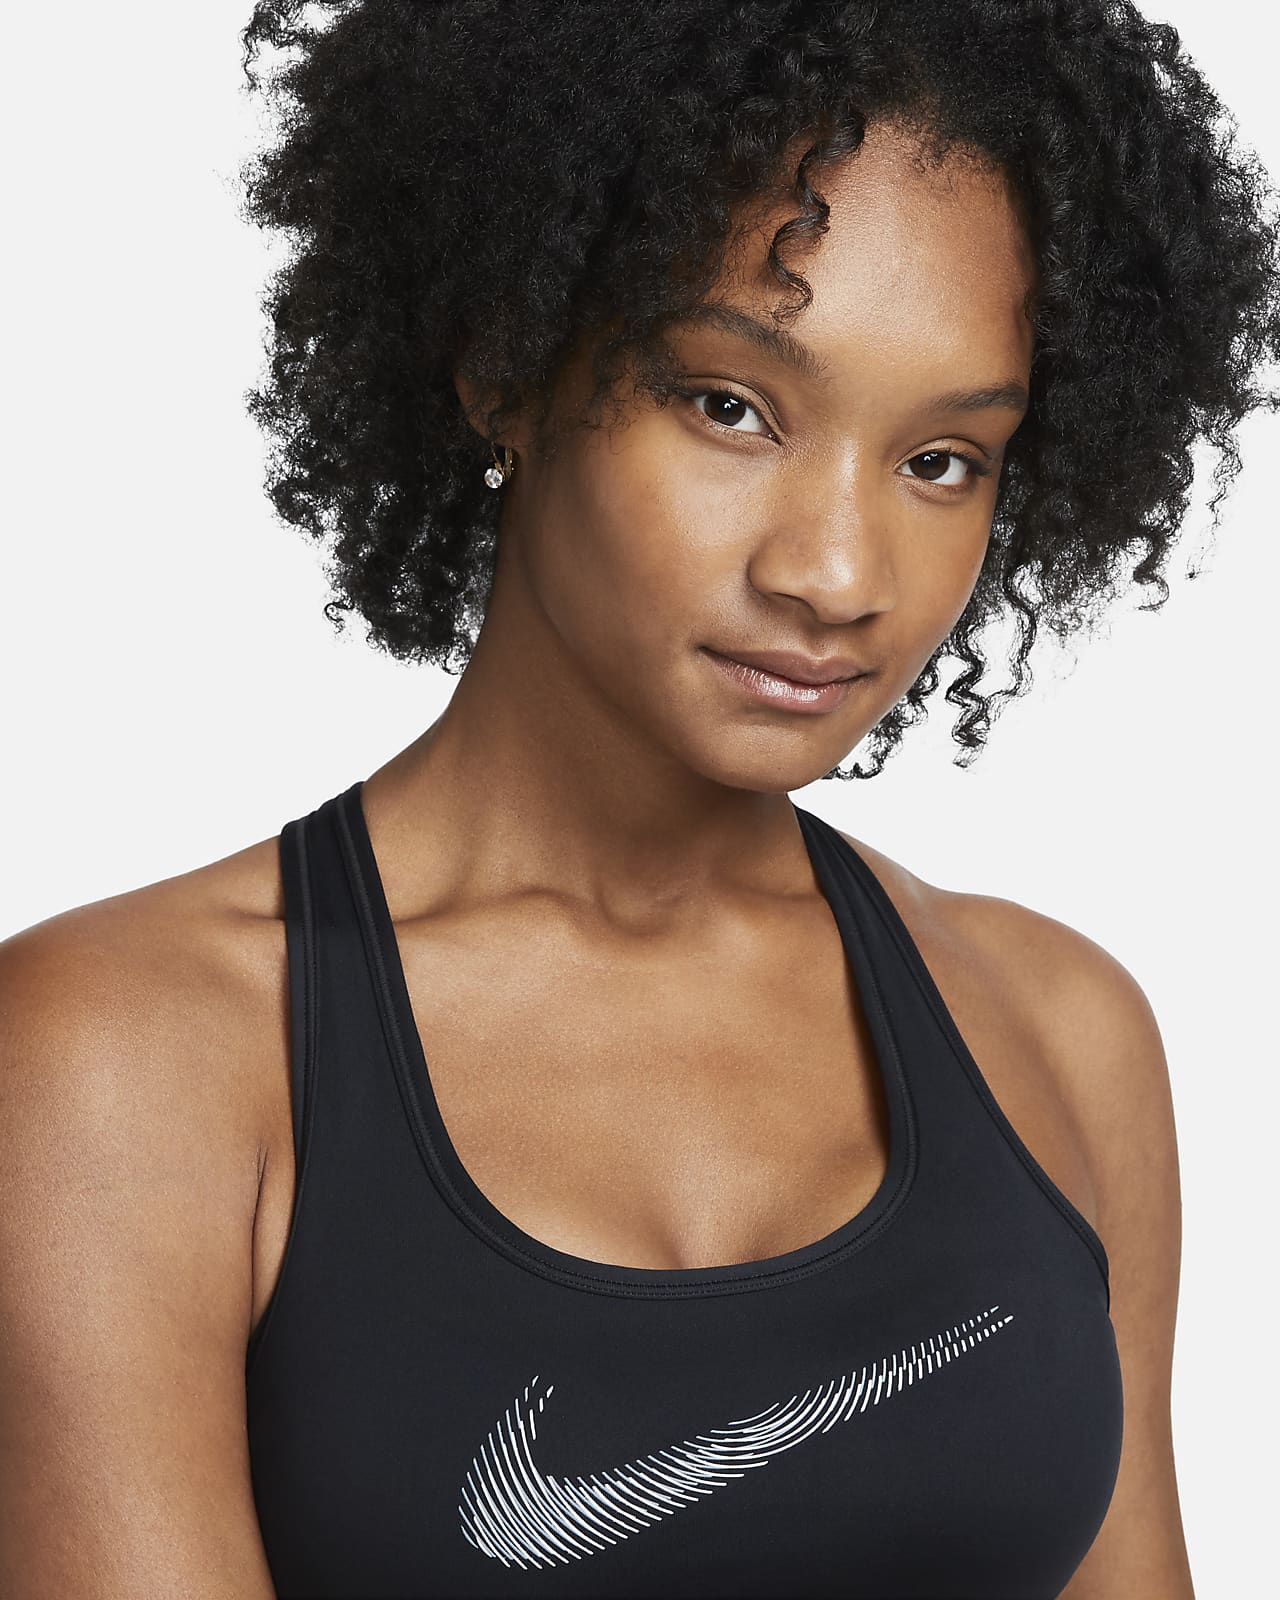 Nike Womens sports bra - fierce support purple black - size medium